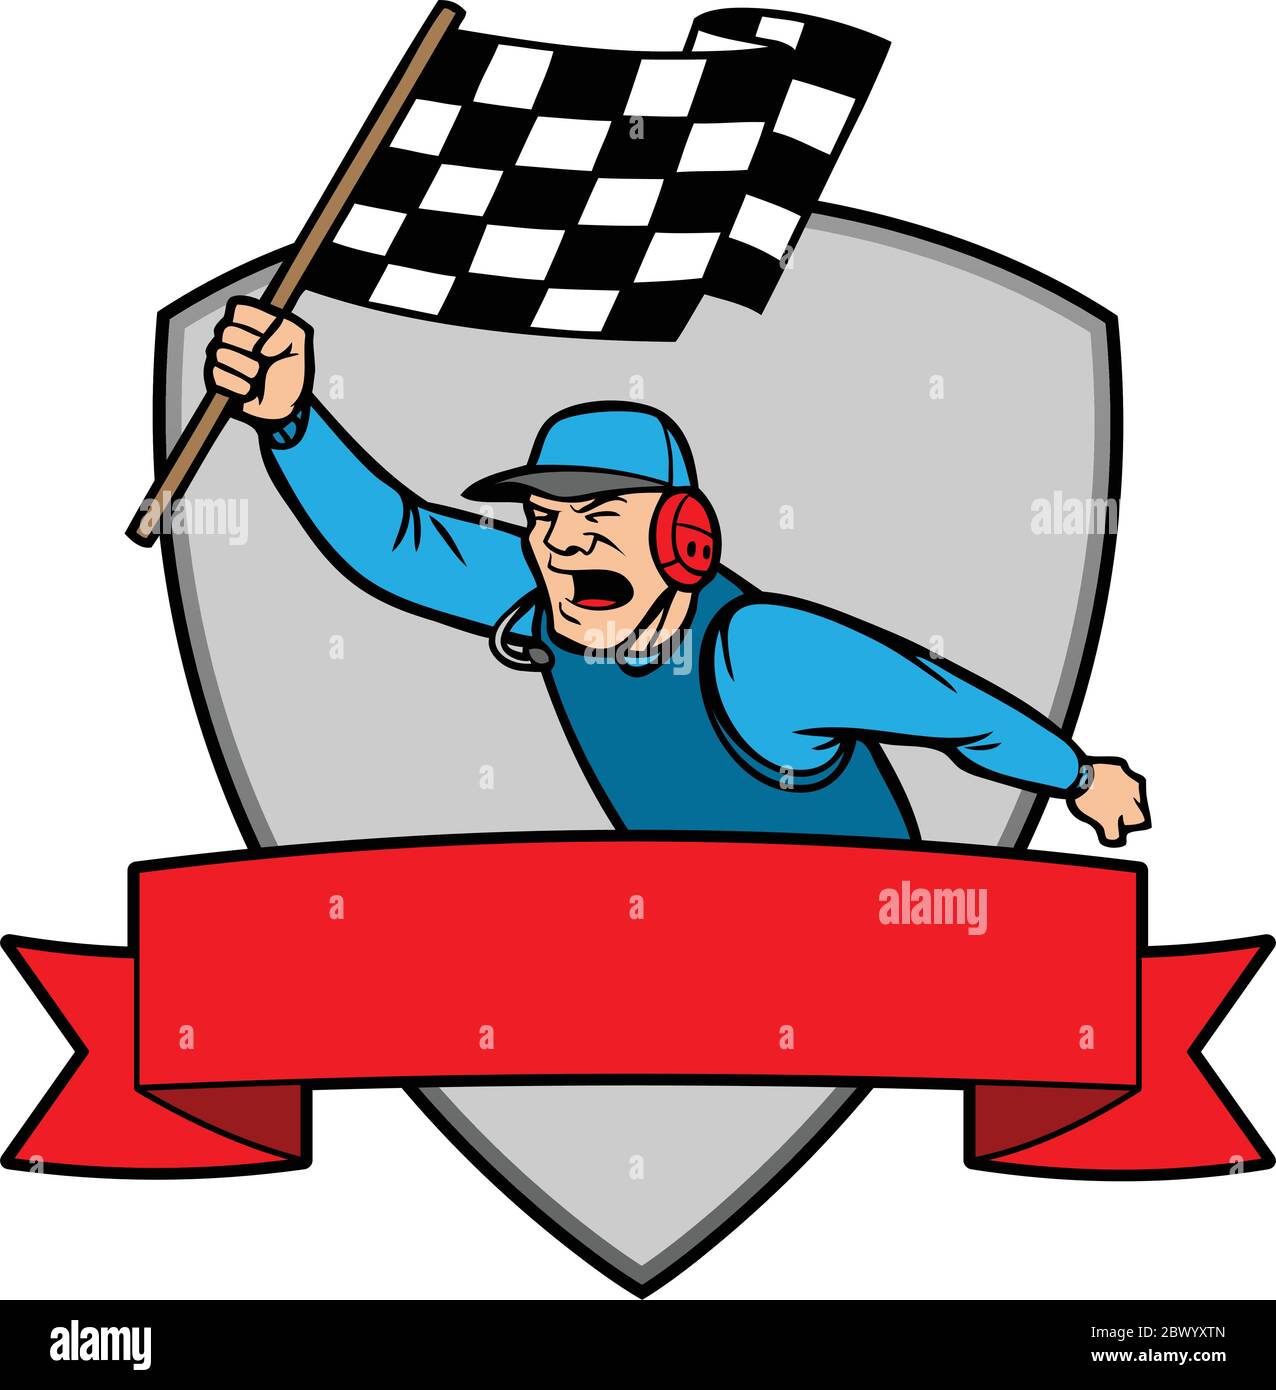 https://c8.alamy.com/comp/2BWYXTN/finish-line-insignia-an-illustration-of-a-finish-line-insignia-2BWYXTN.jpg